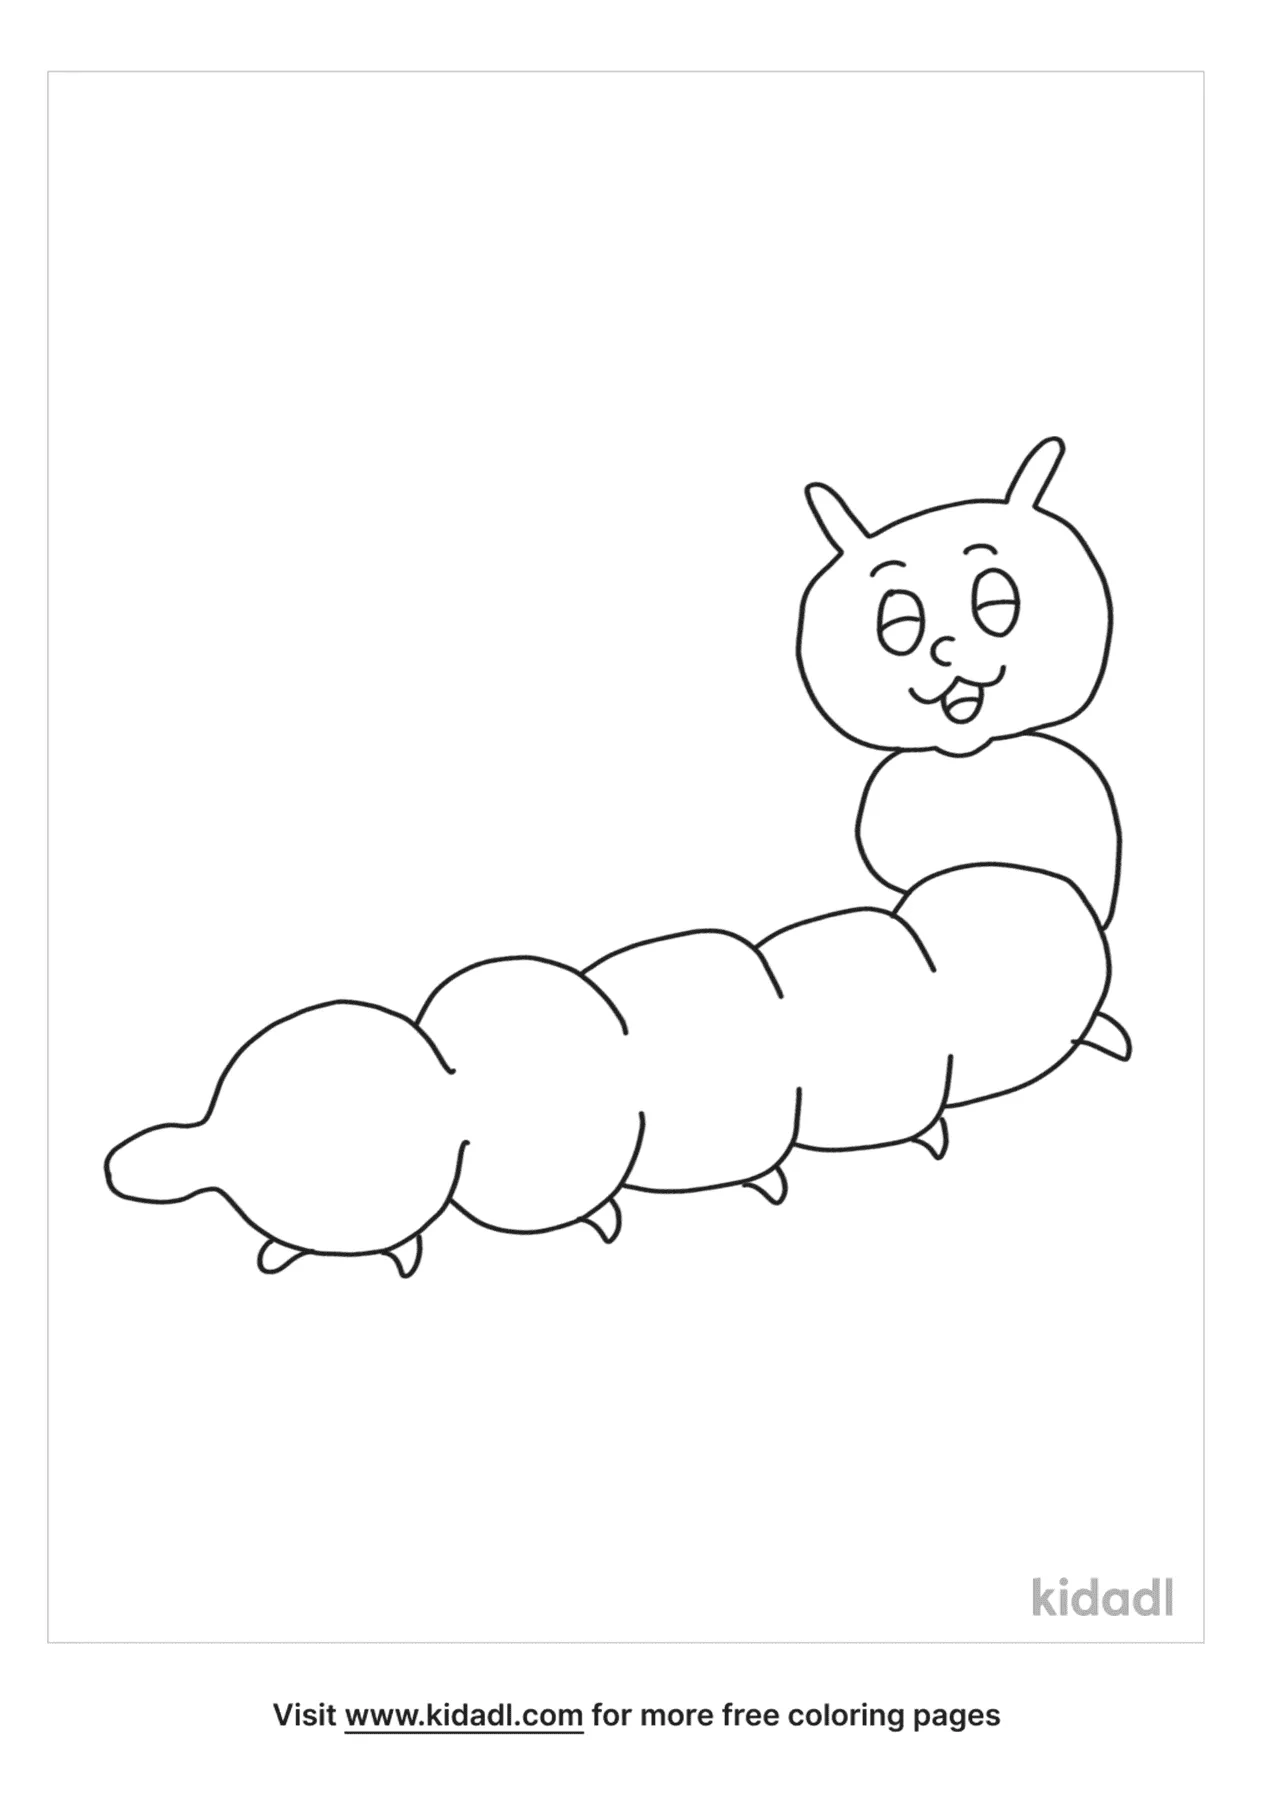 Free Caterpillar Cartoon Coloring Page | Coloring Page Printables | Kidadl